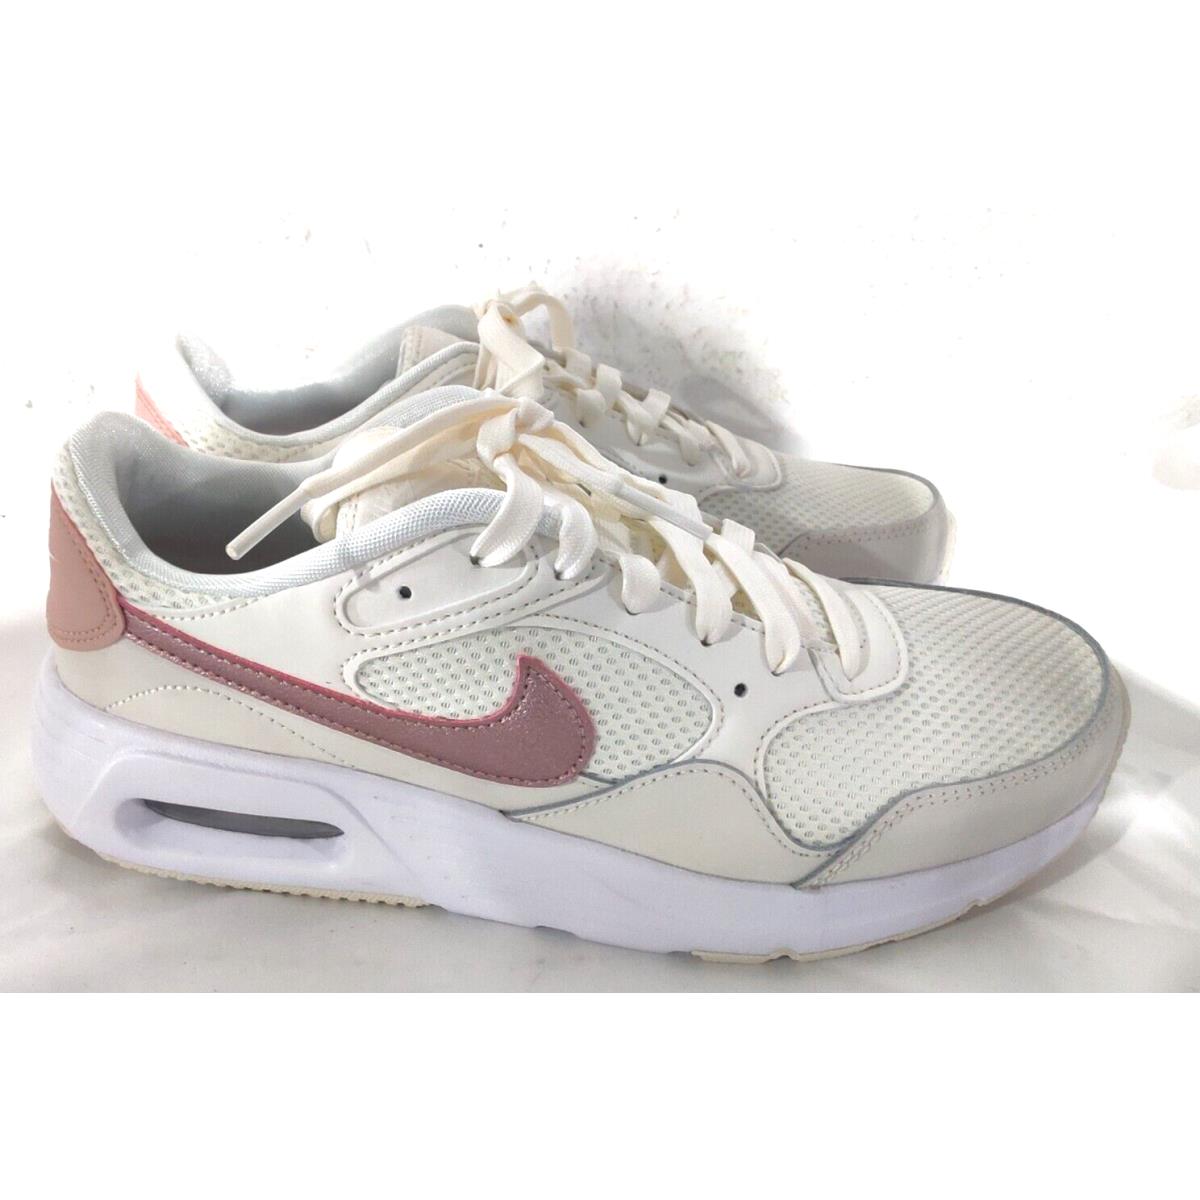 Nike Air Max SC SE Shoes - Sail/pink Oxford DV6842-100